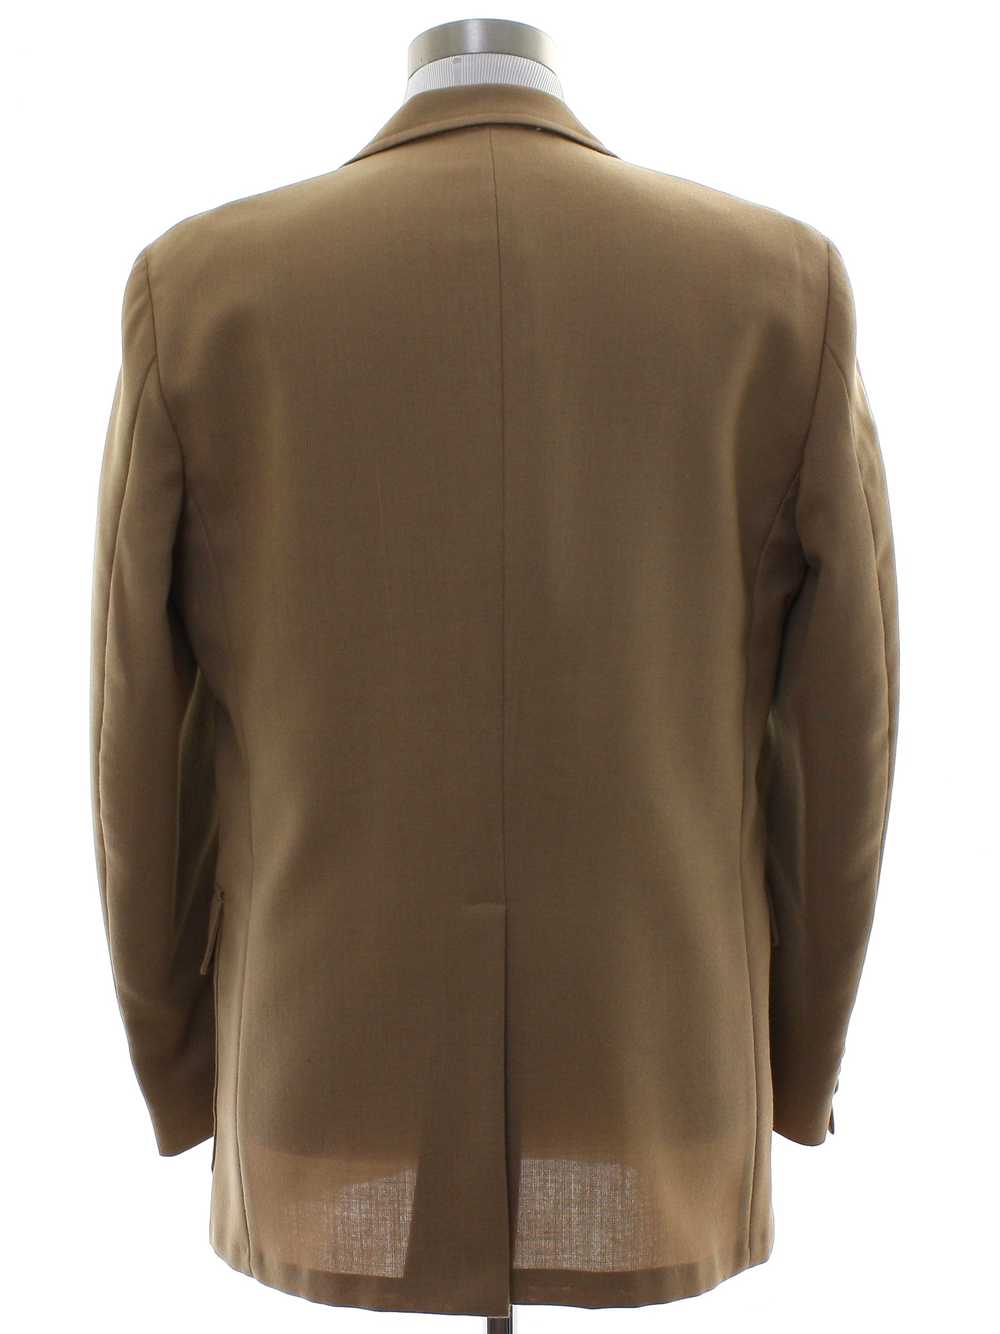 1980's Mens Blazer Style Sport Coat Jacket - image 3